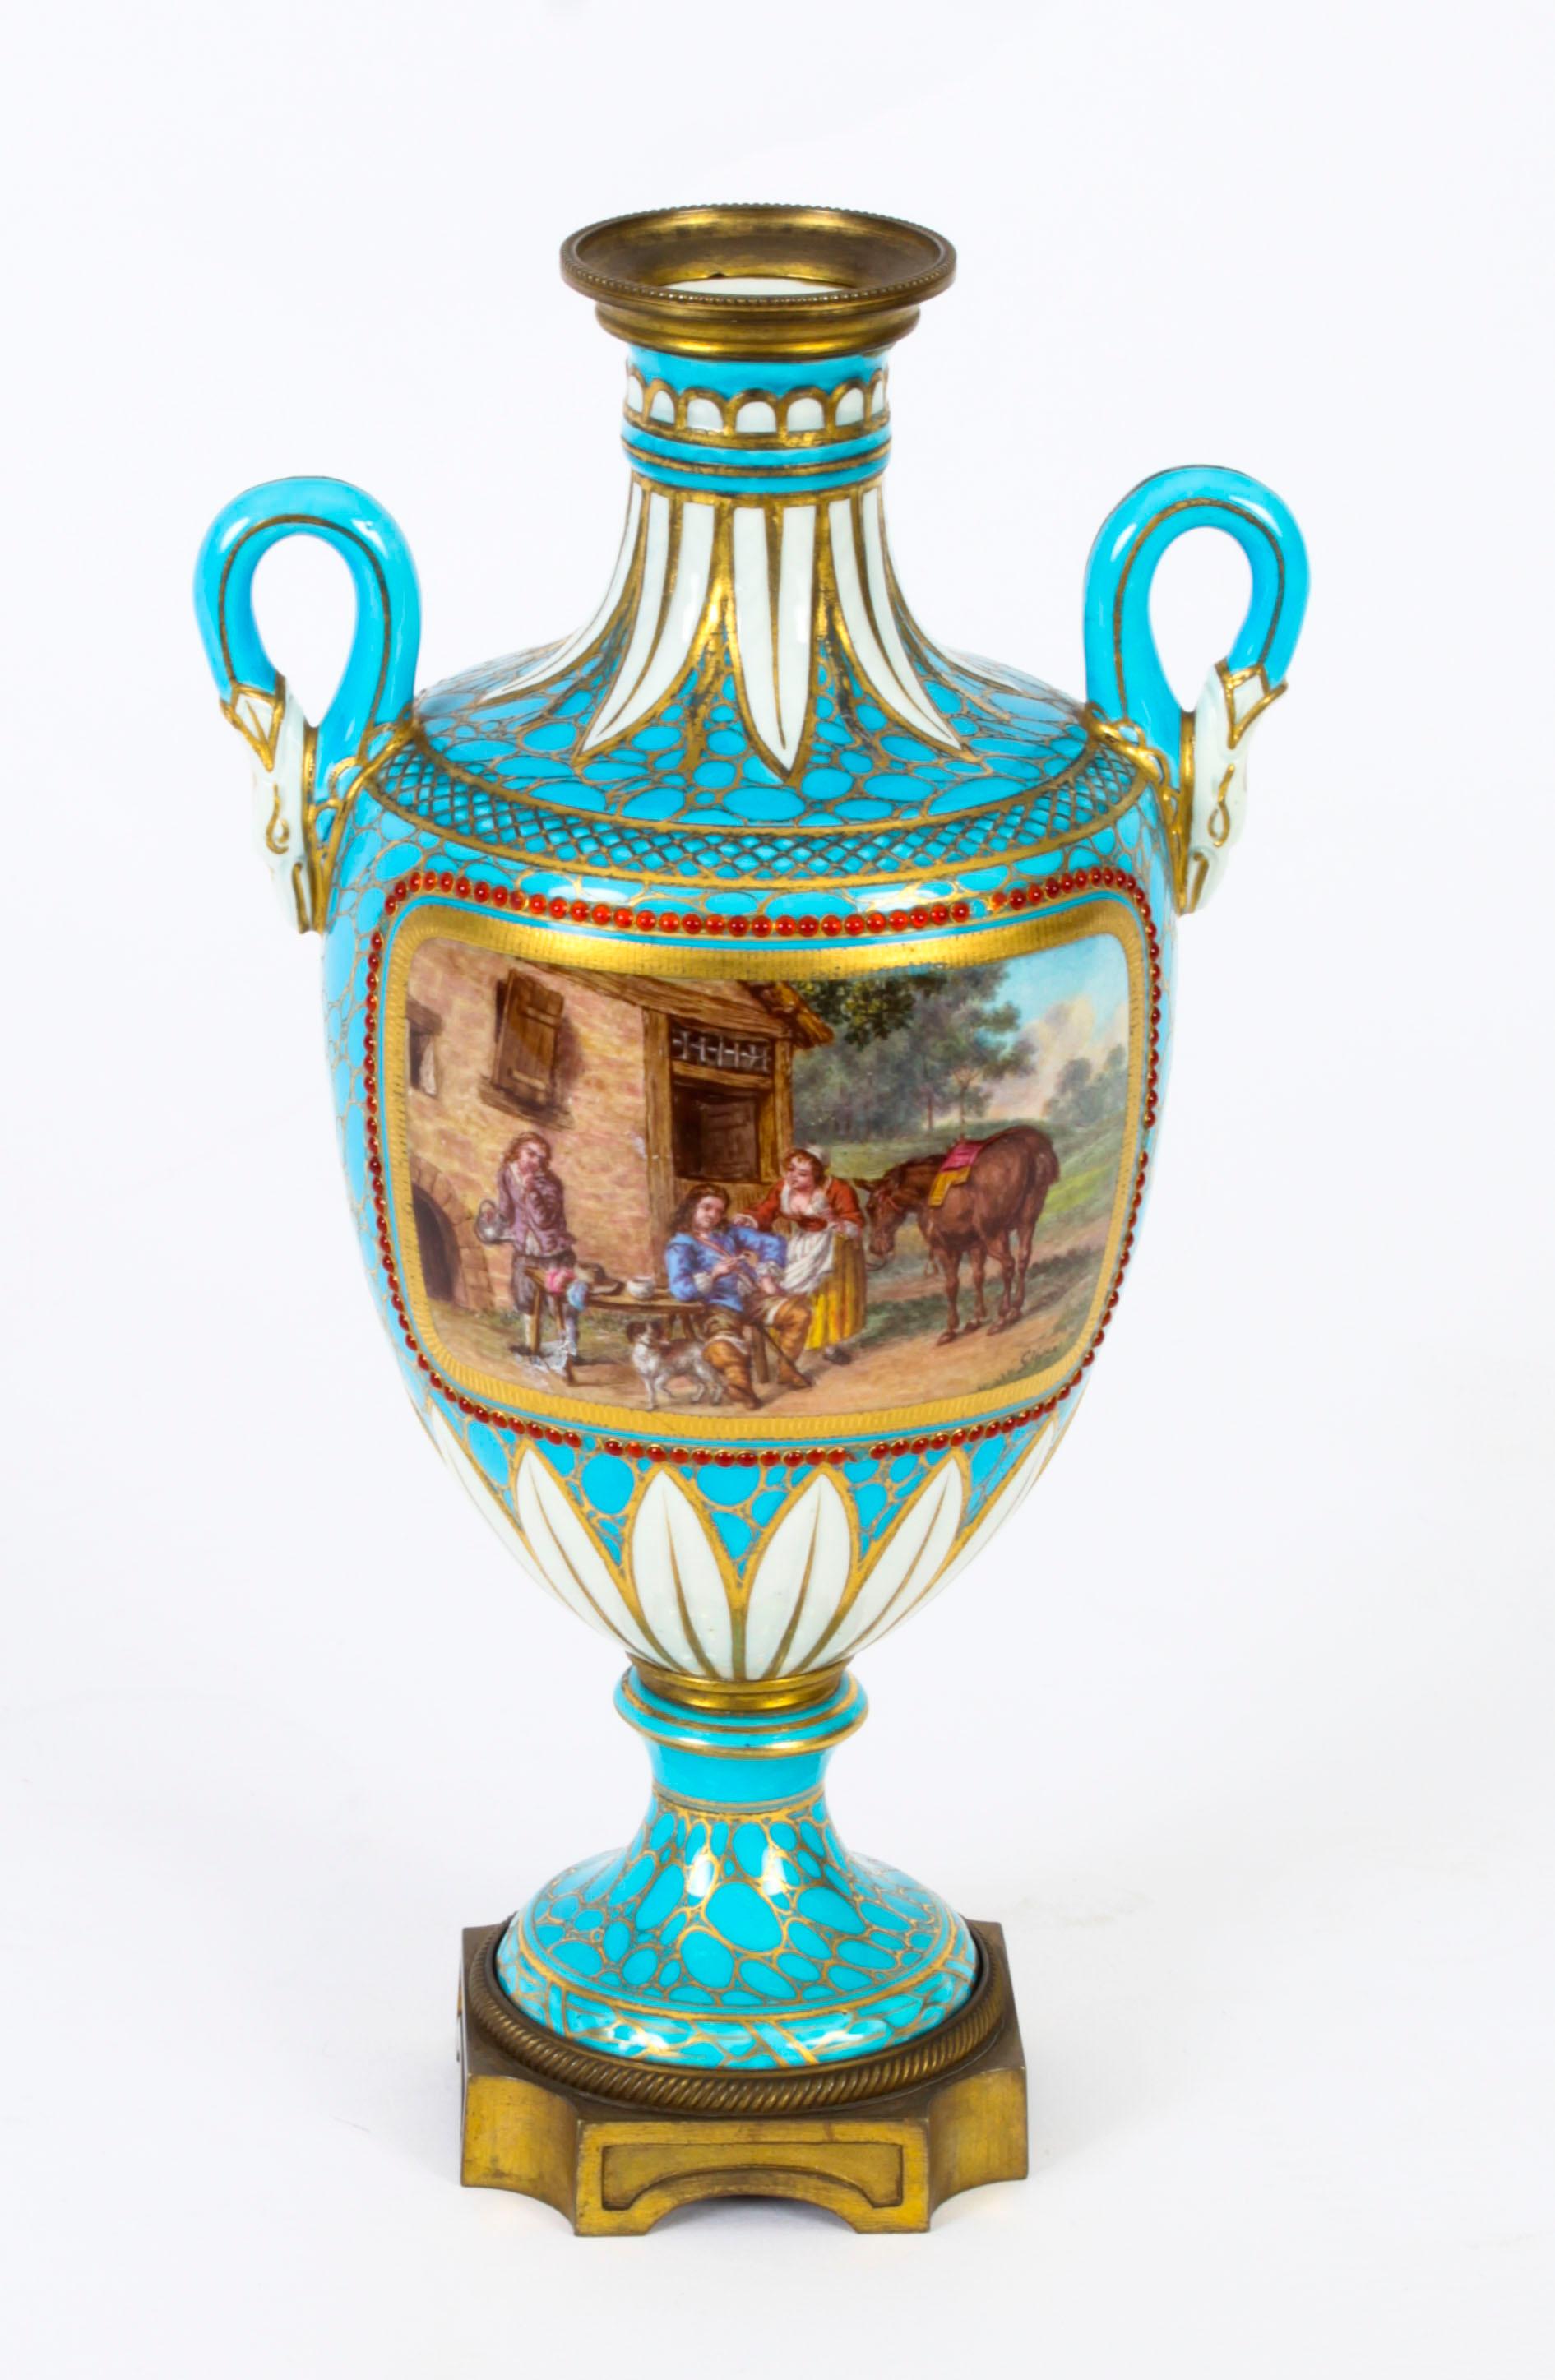 Antique Pair of French Bleu Celeste Porcelain Urns 19th Century For Sale 7